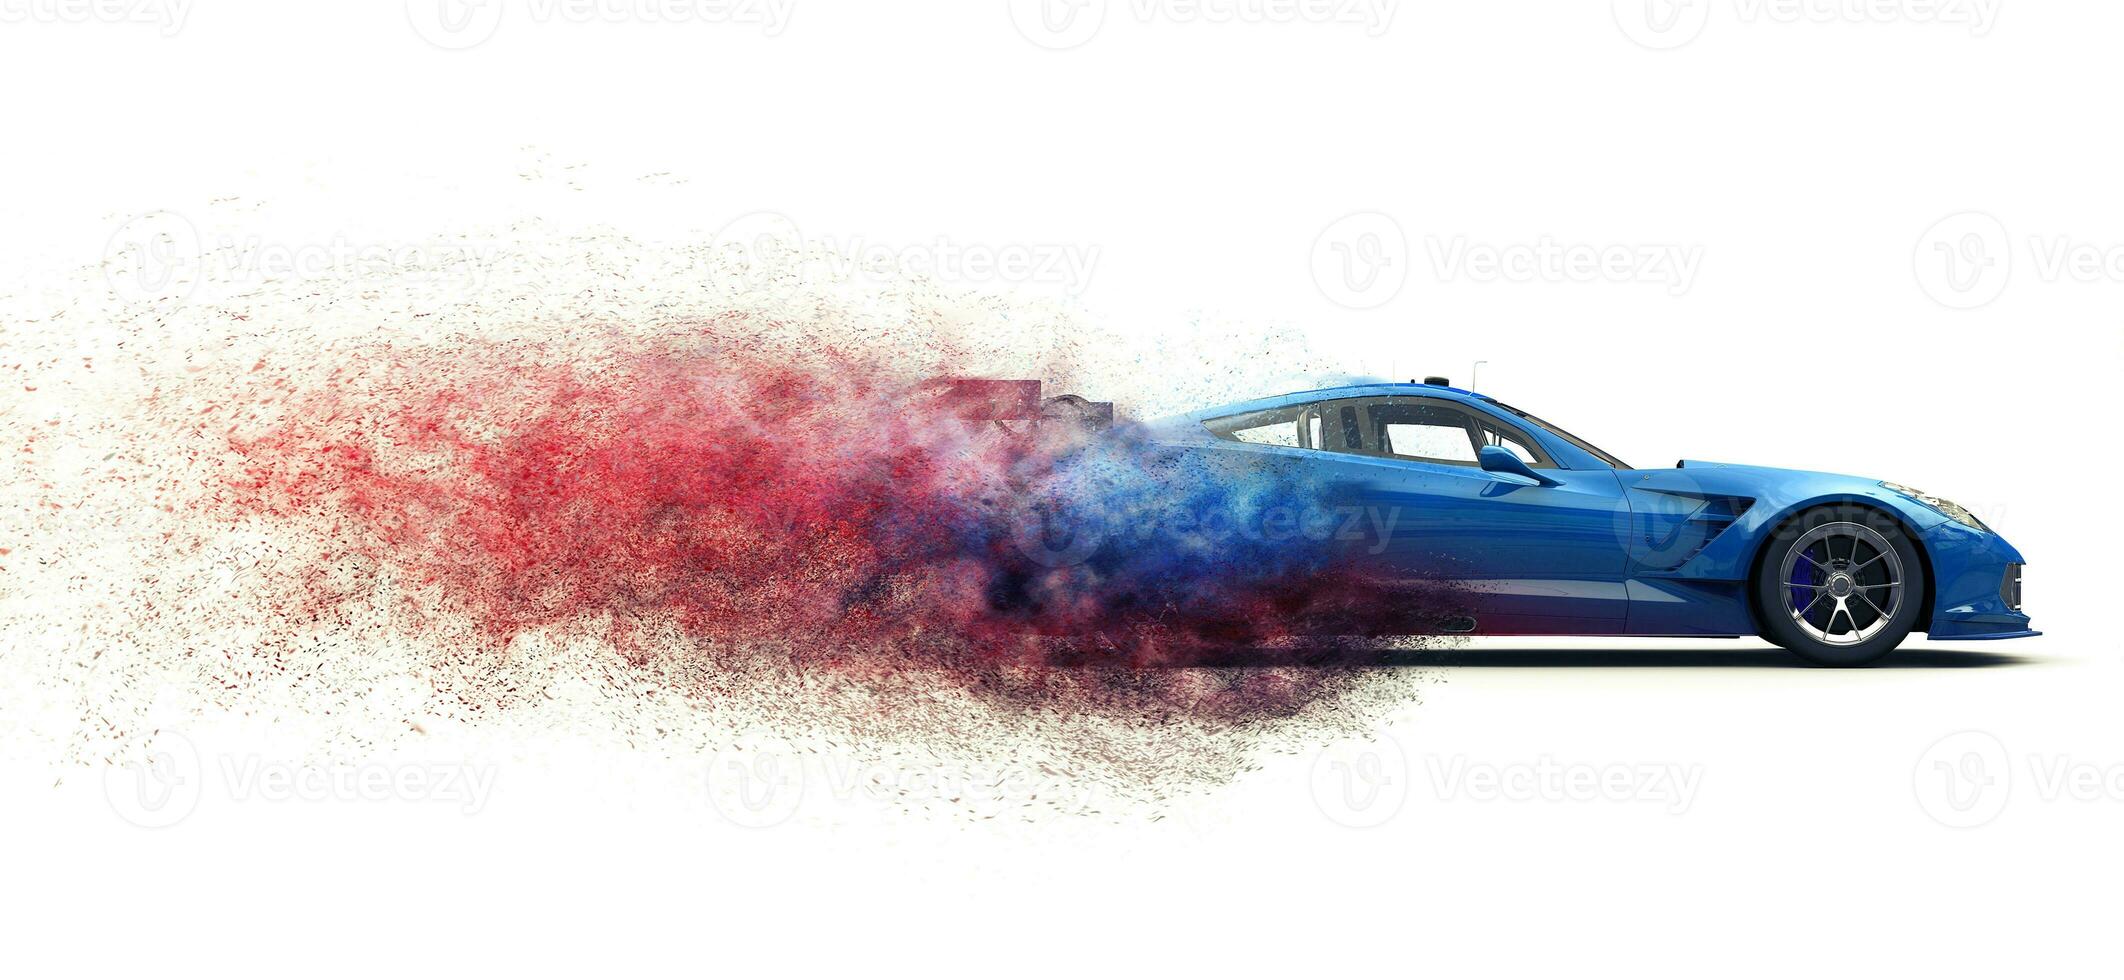 extreem modern blauw super auto - deeltje desintegratie effect foto